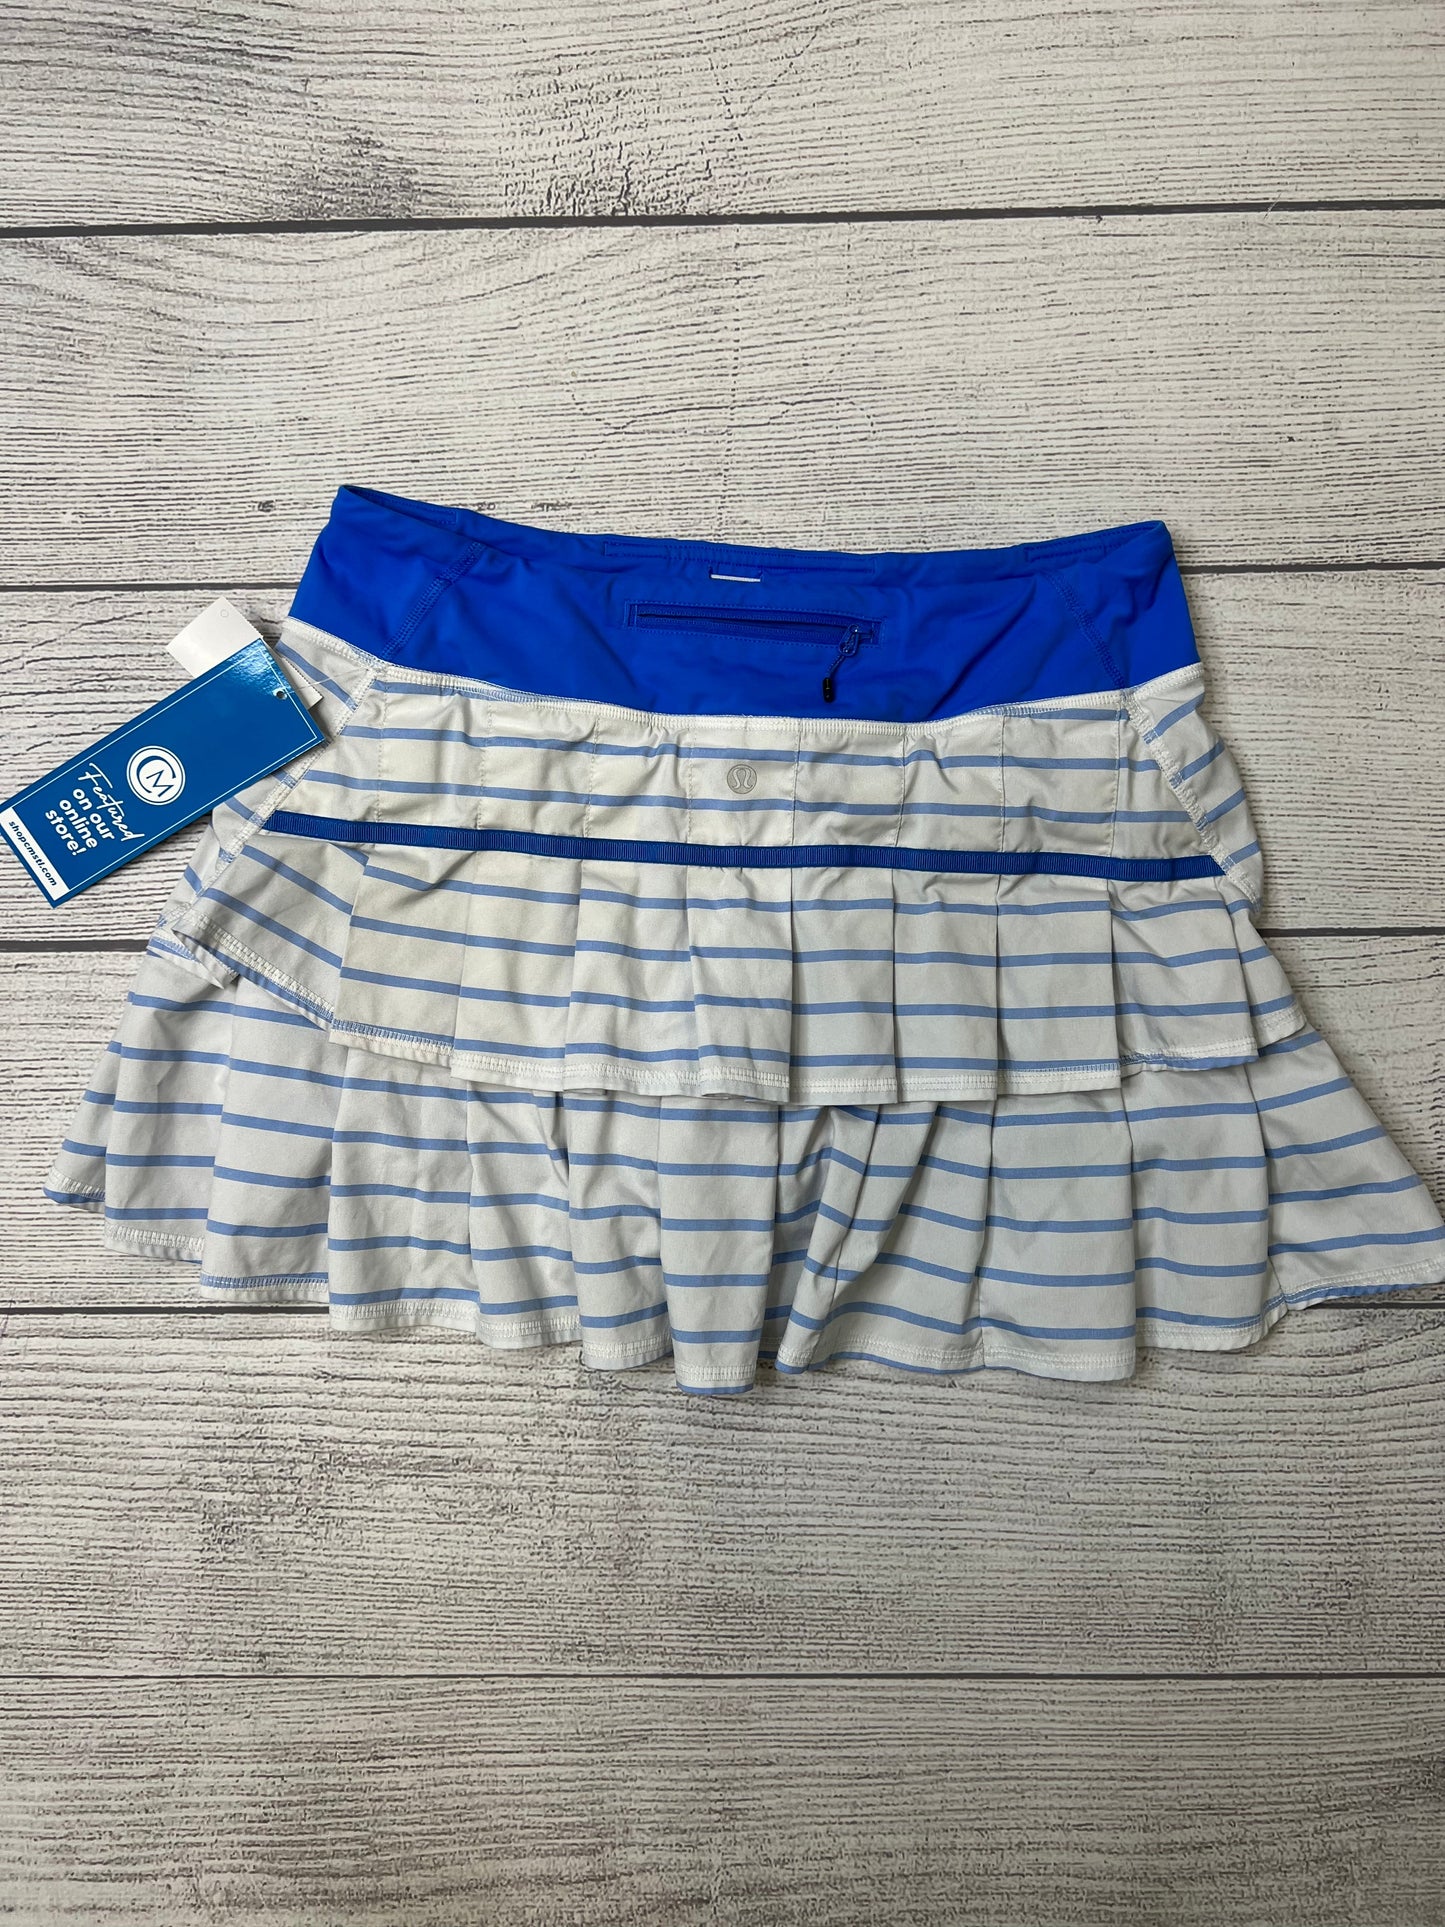 Athletic Skirt Skort By Lululemon  Size: M